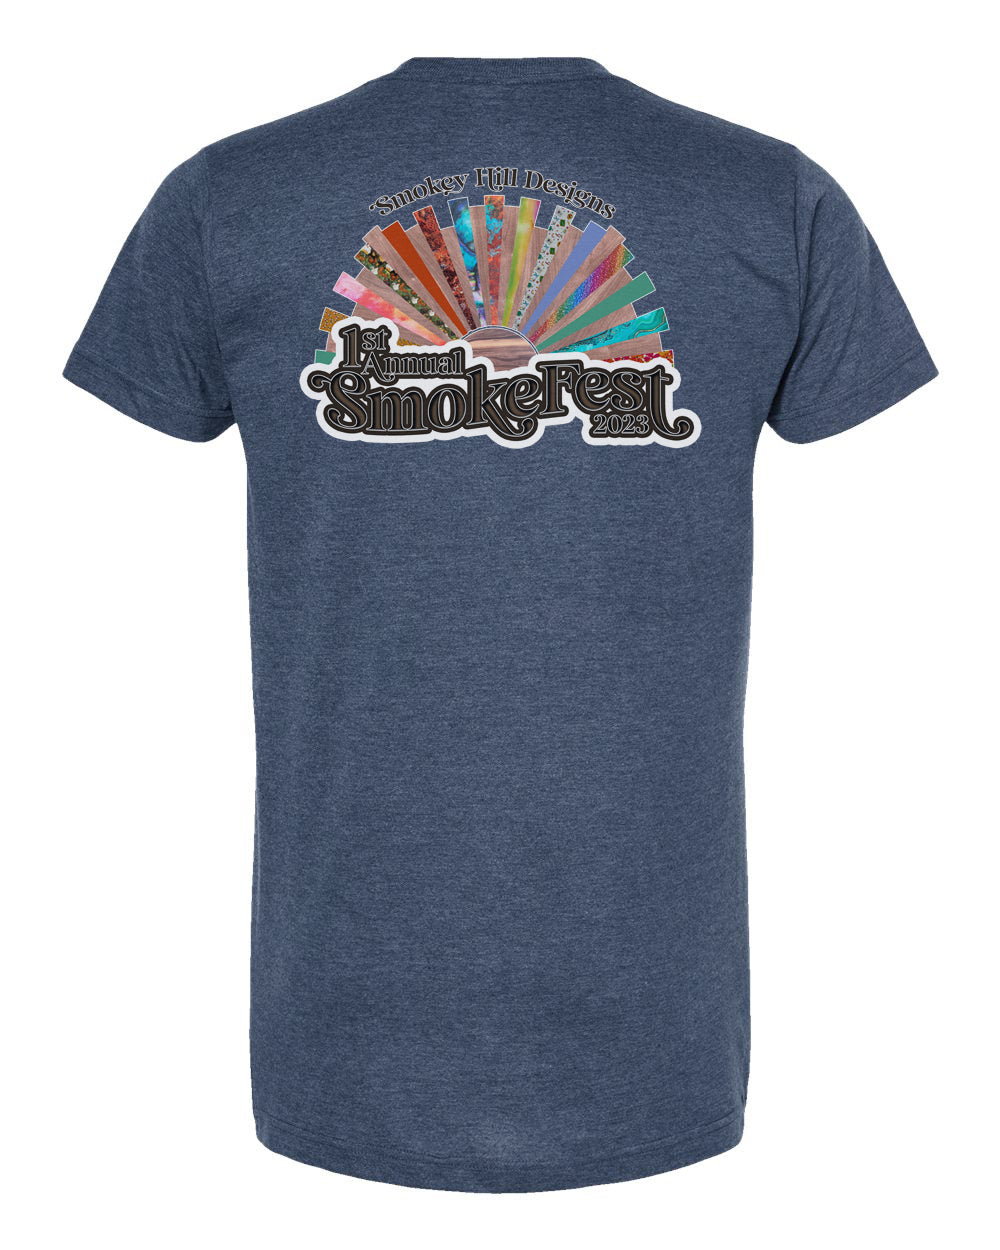 Adult SmokeFest T-Shirt #1 (Sunrise Design)